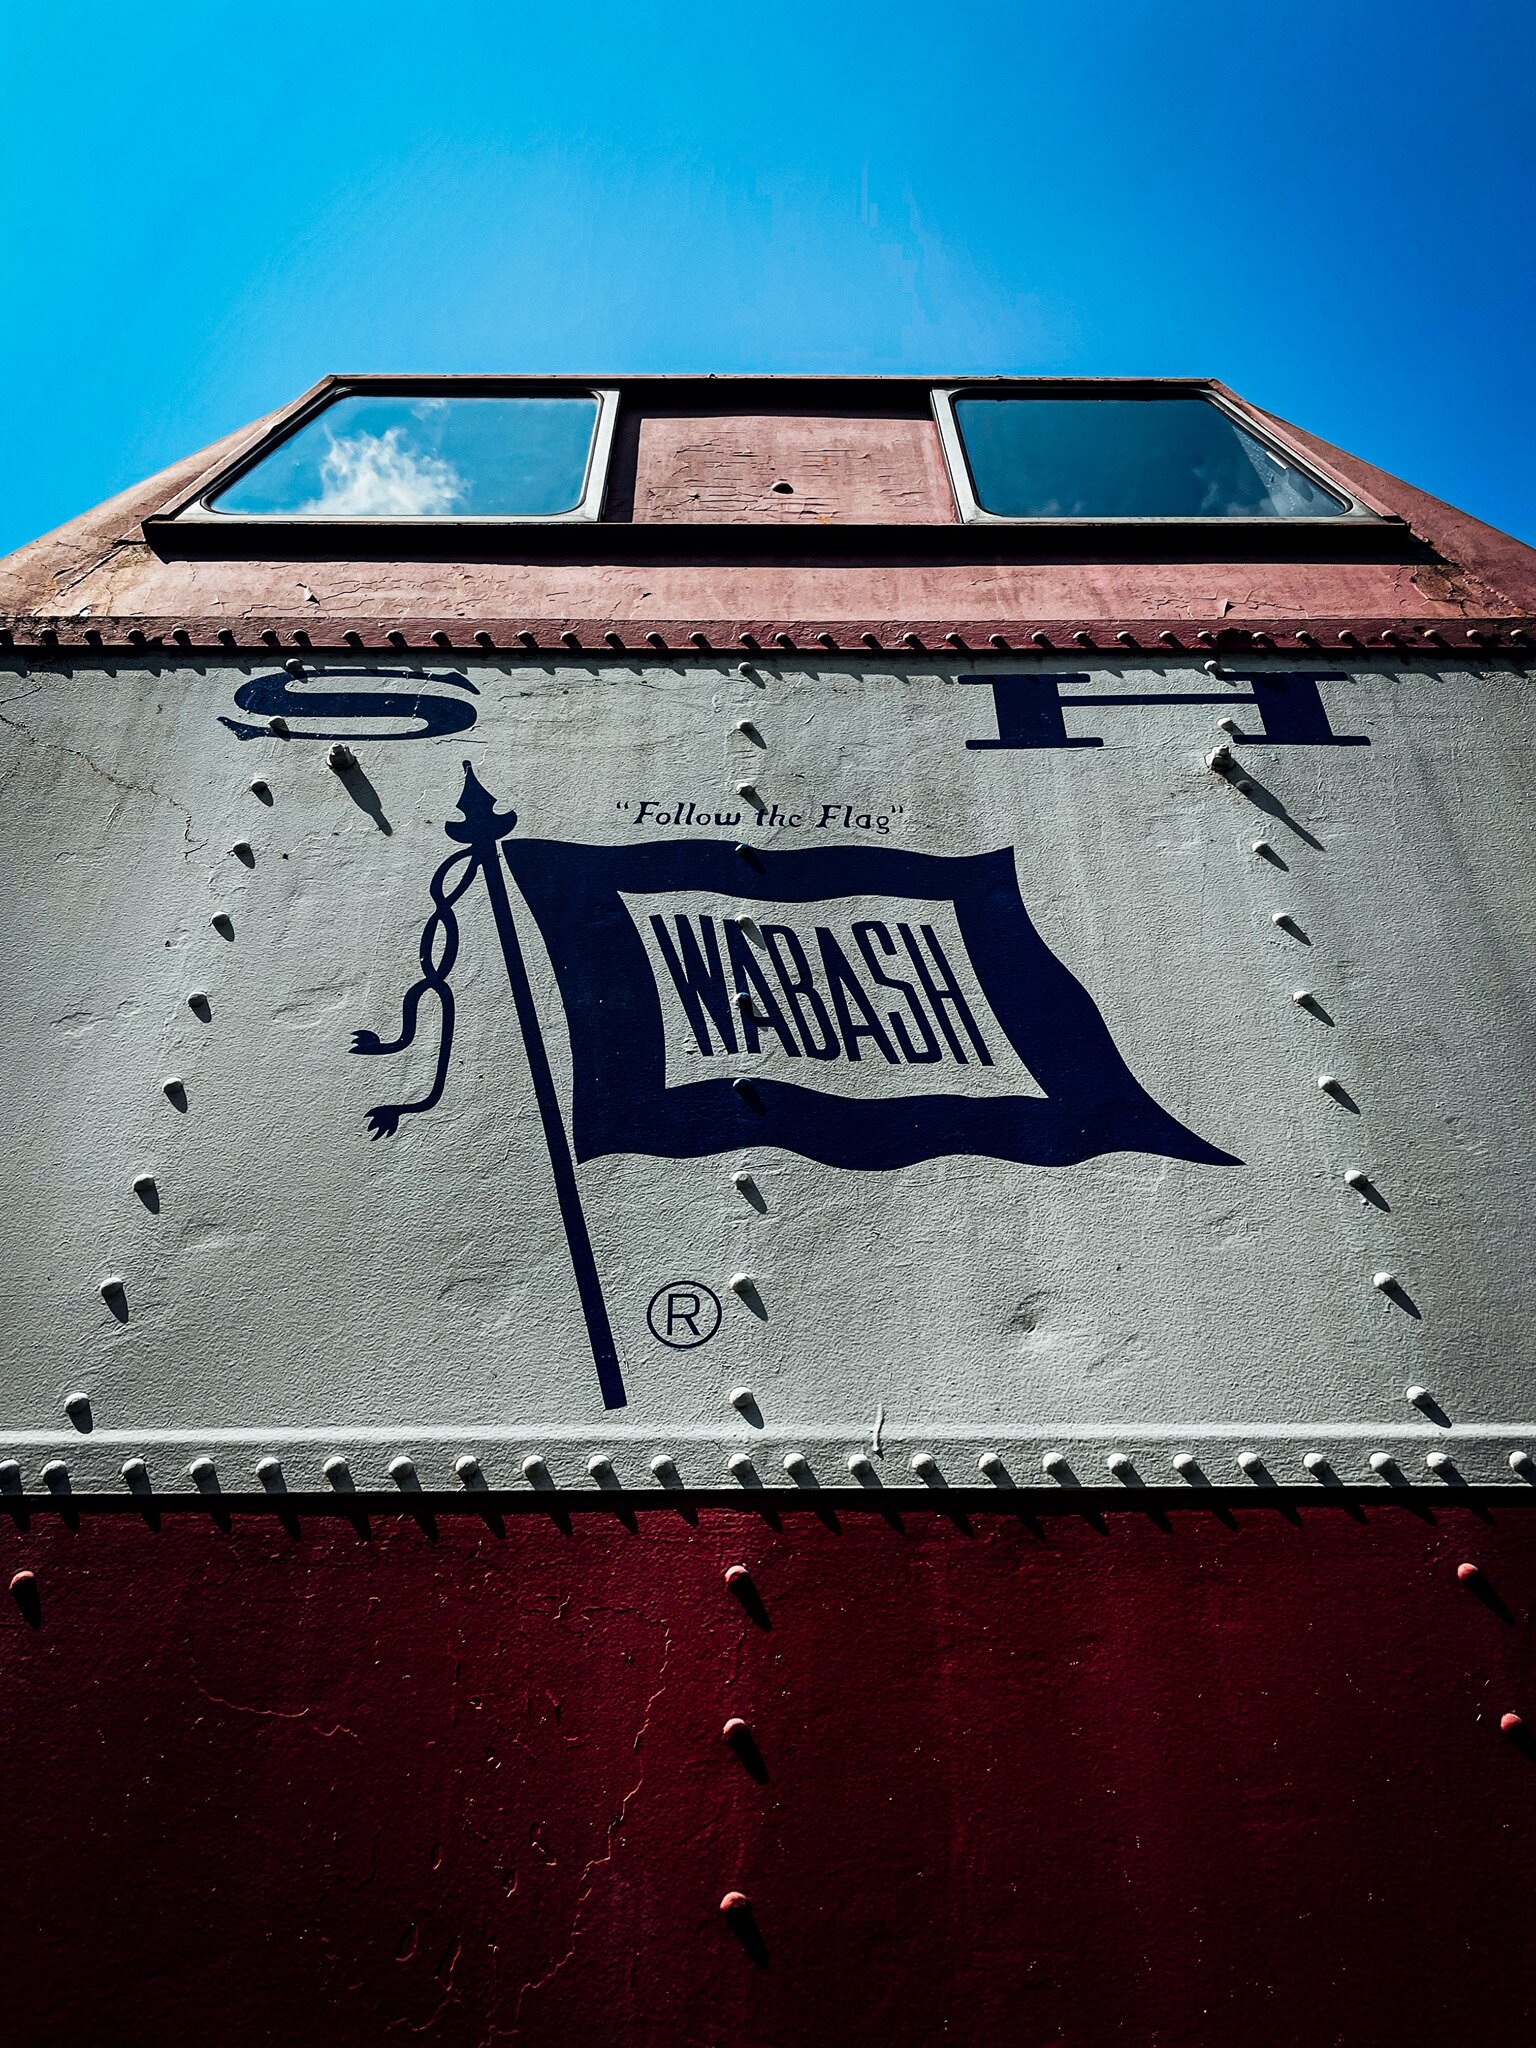 wabash-caboose-at-museum-of-transport.jpg